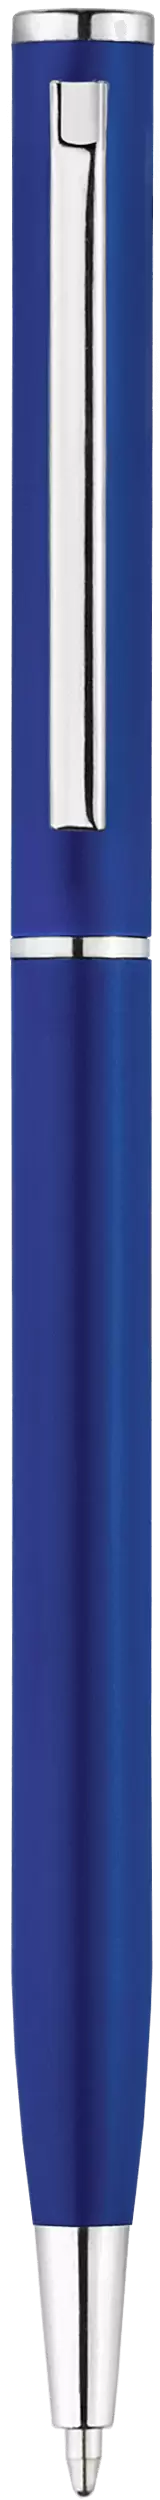 Ручка HILTON Синяя 1060-01